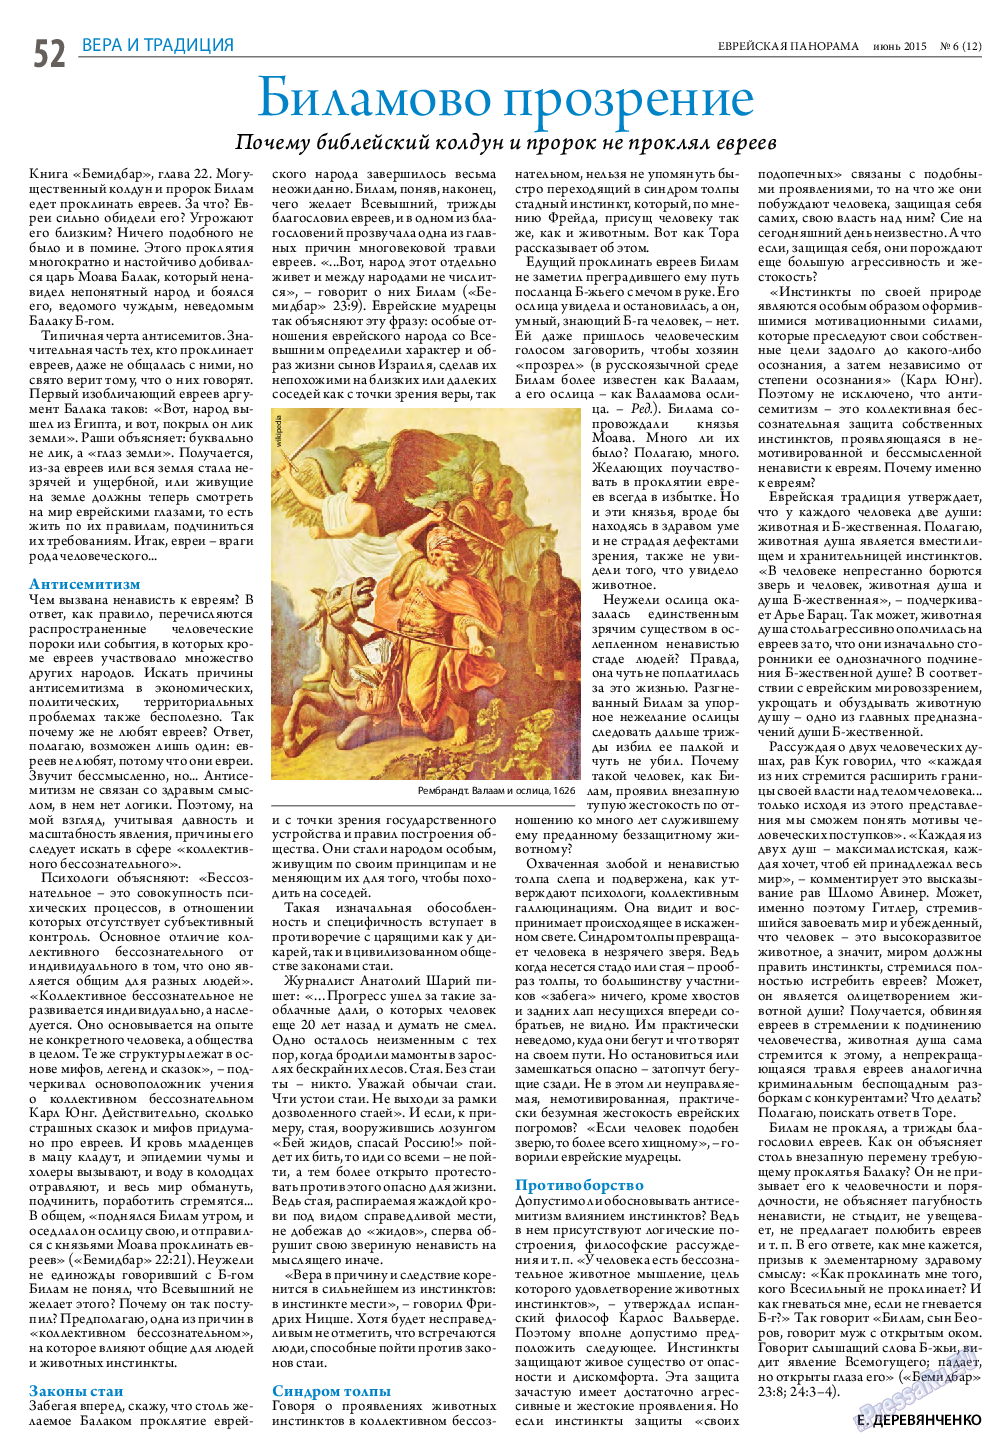 Еврейская панорама, газета. 2015 №6 стр.52